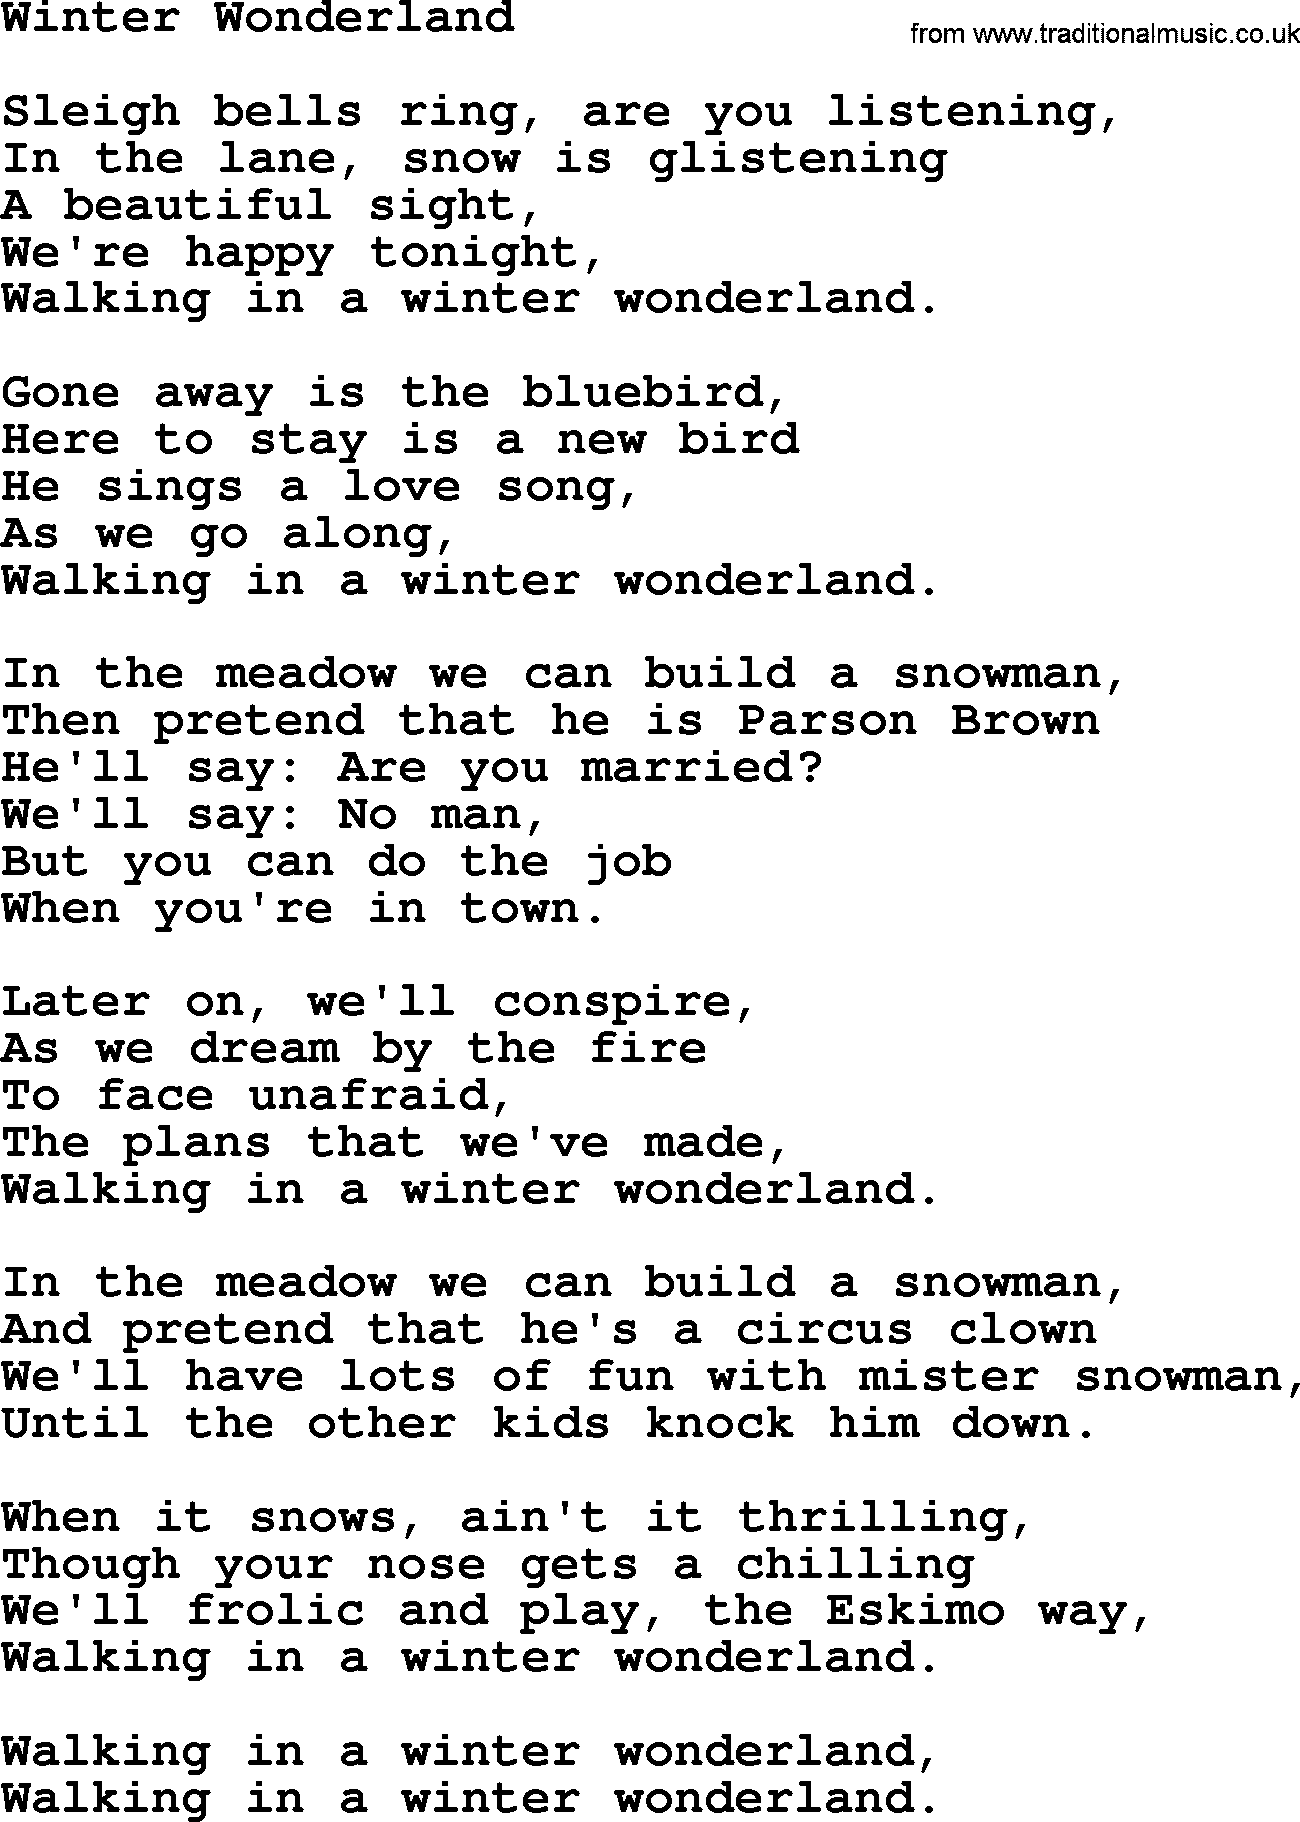 Willie Nelson song: Winter Wonderland lyrics